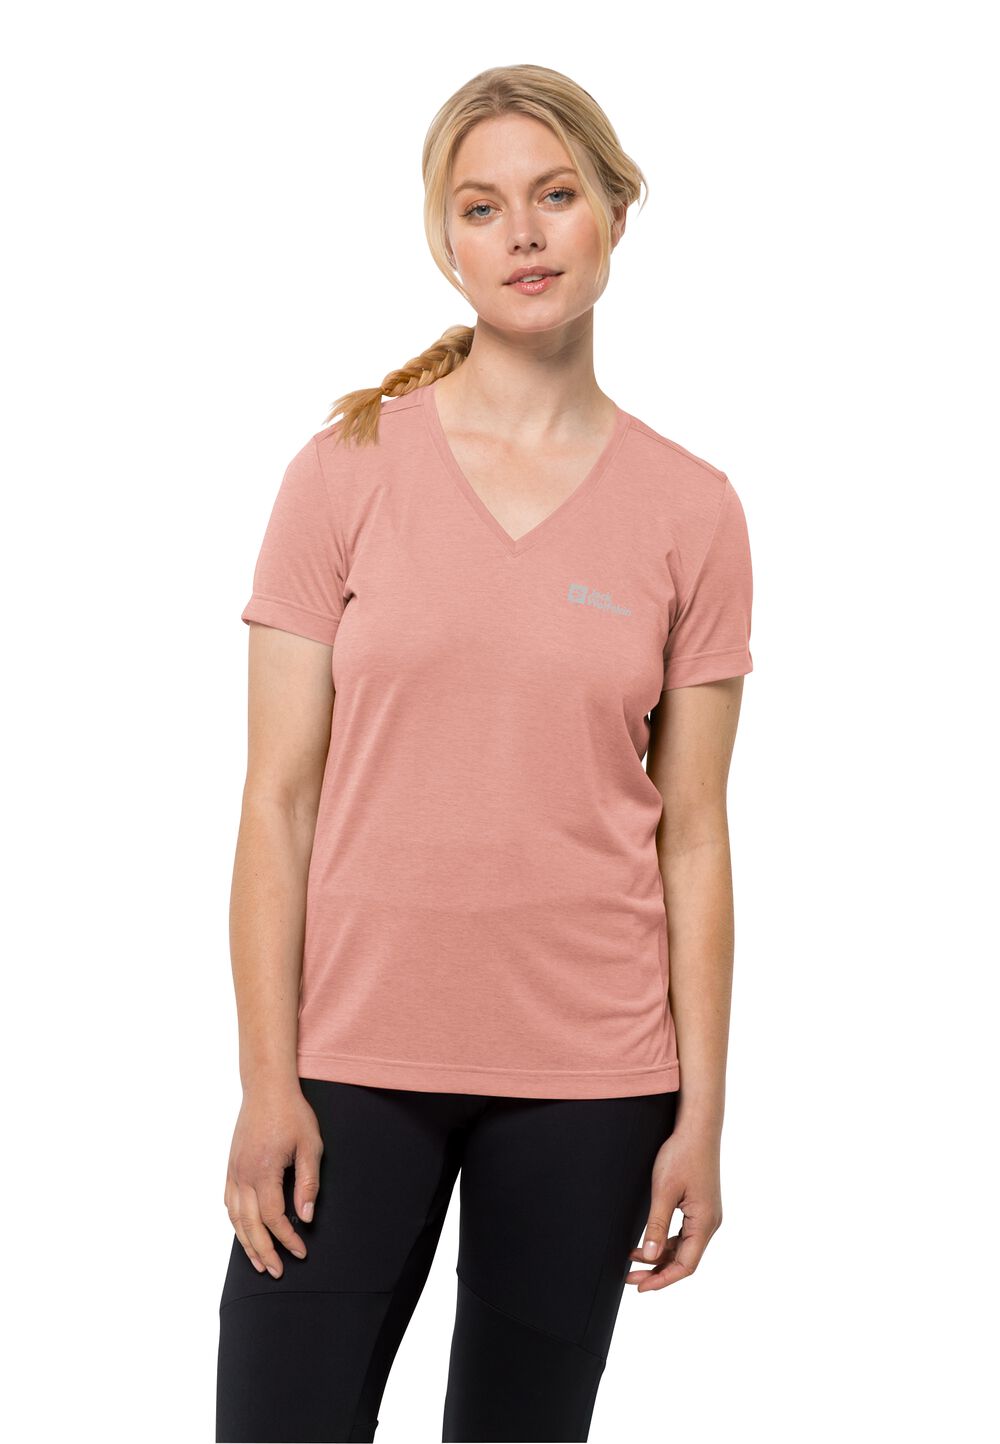 Jack Wolfskin Crosstrail T-Shirt Women Functioneel shirt Dames M bruin rose dawn